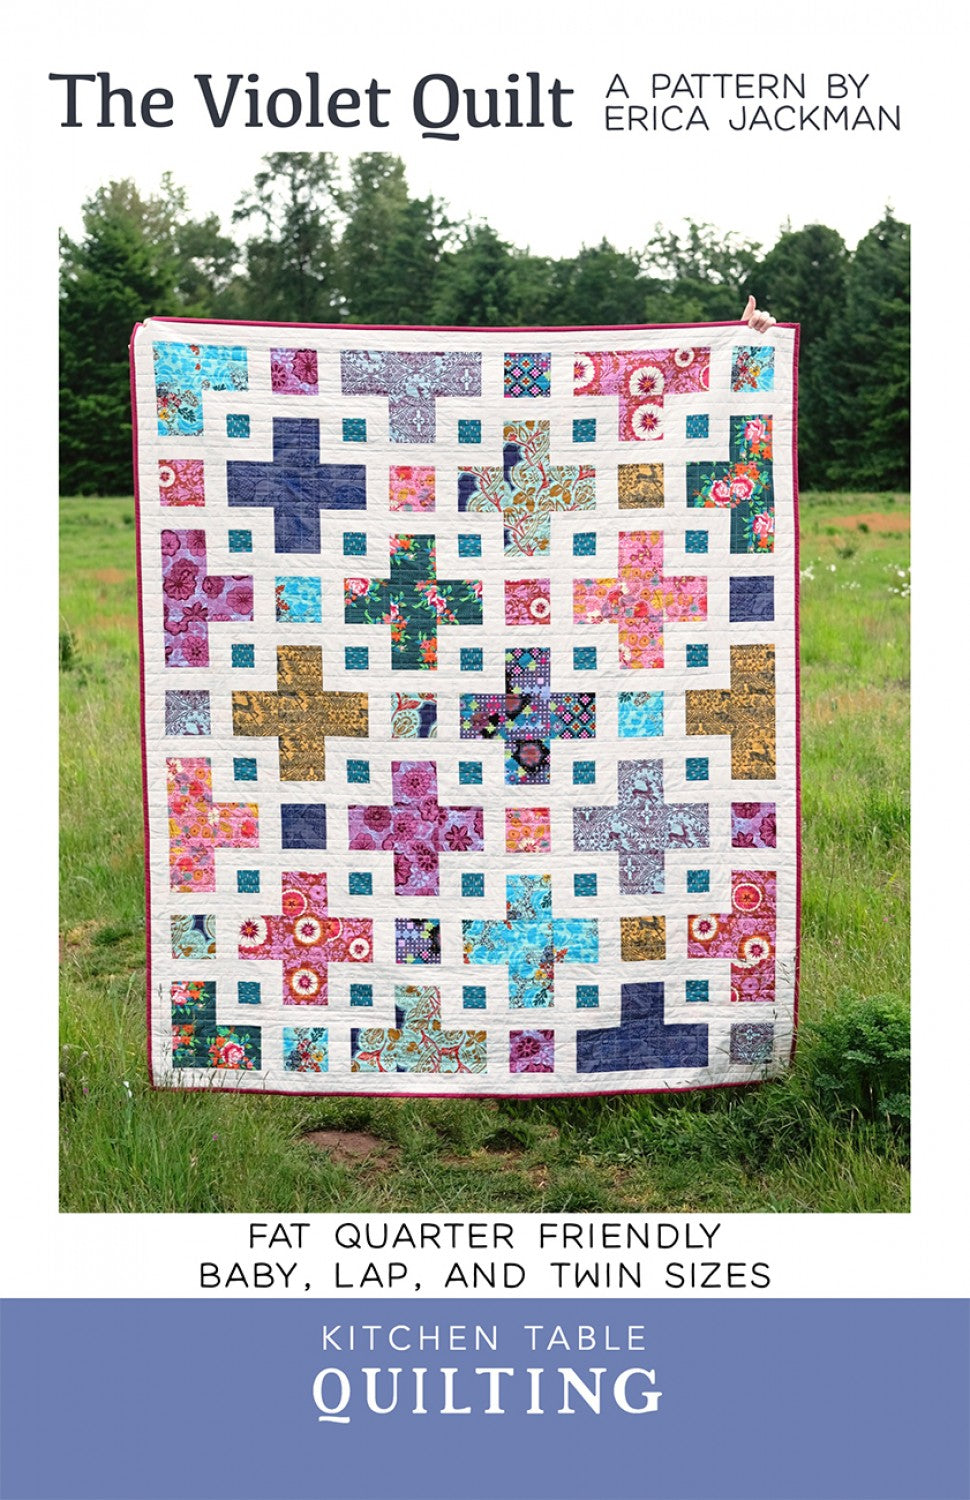 The Violet Quilt, Pattern